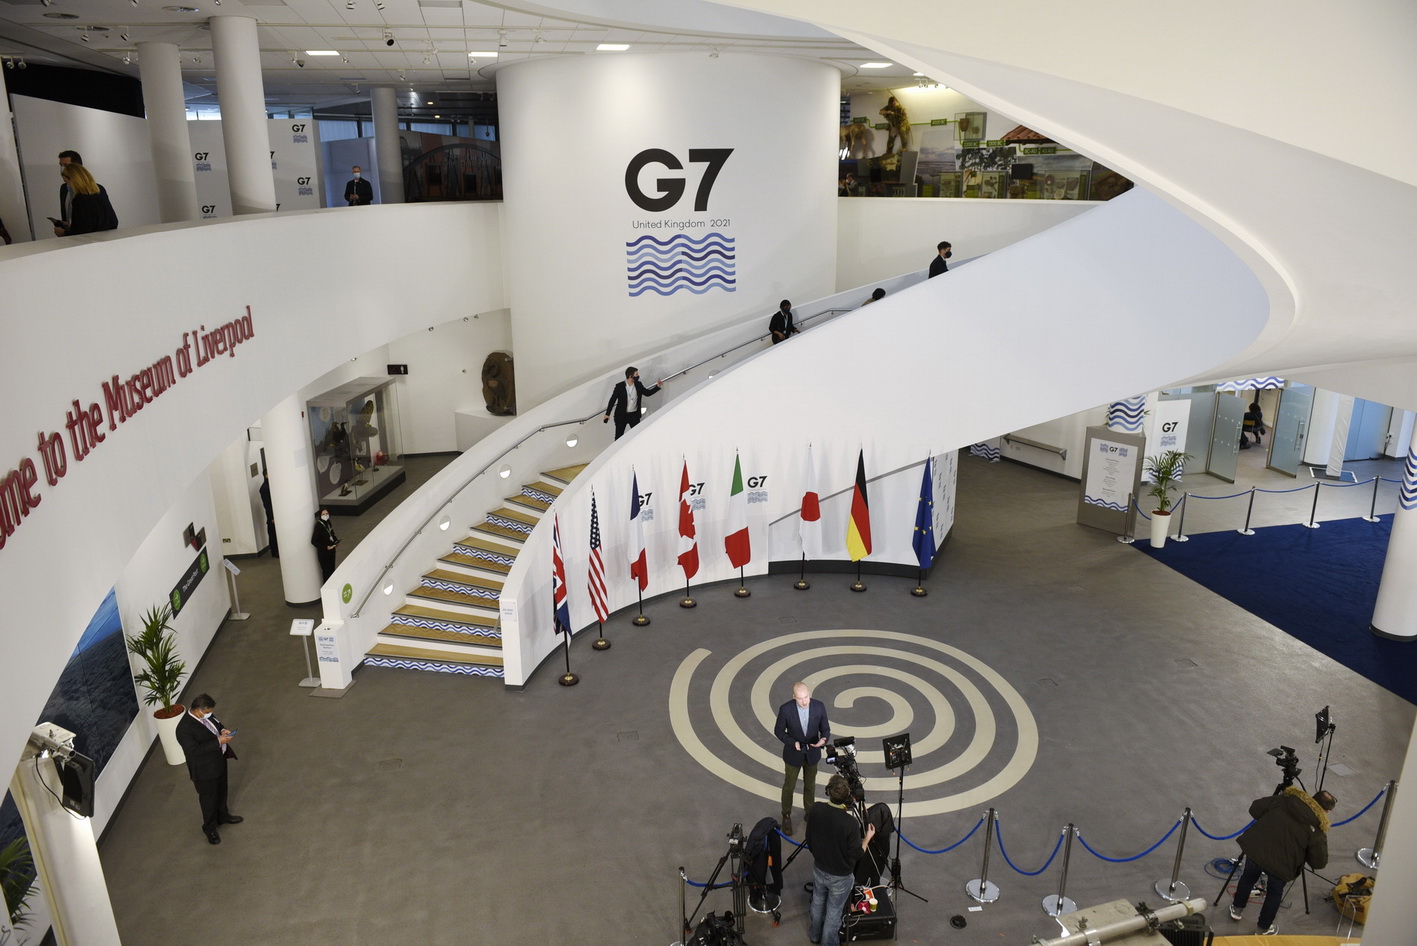 G7 Summit venue in Liverpool 2021 image